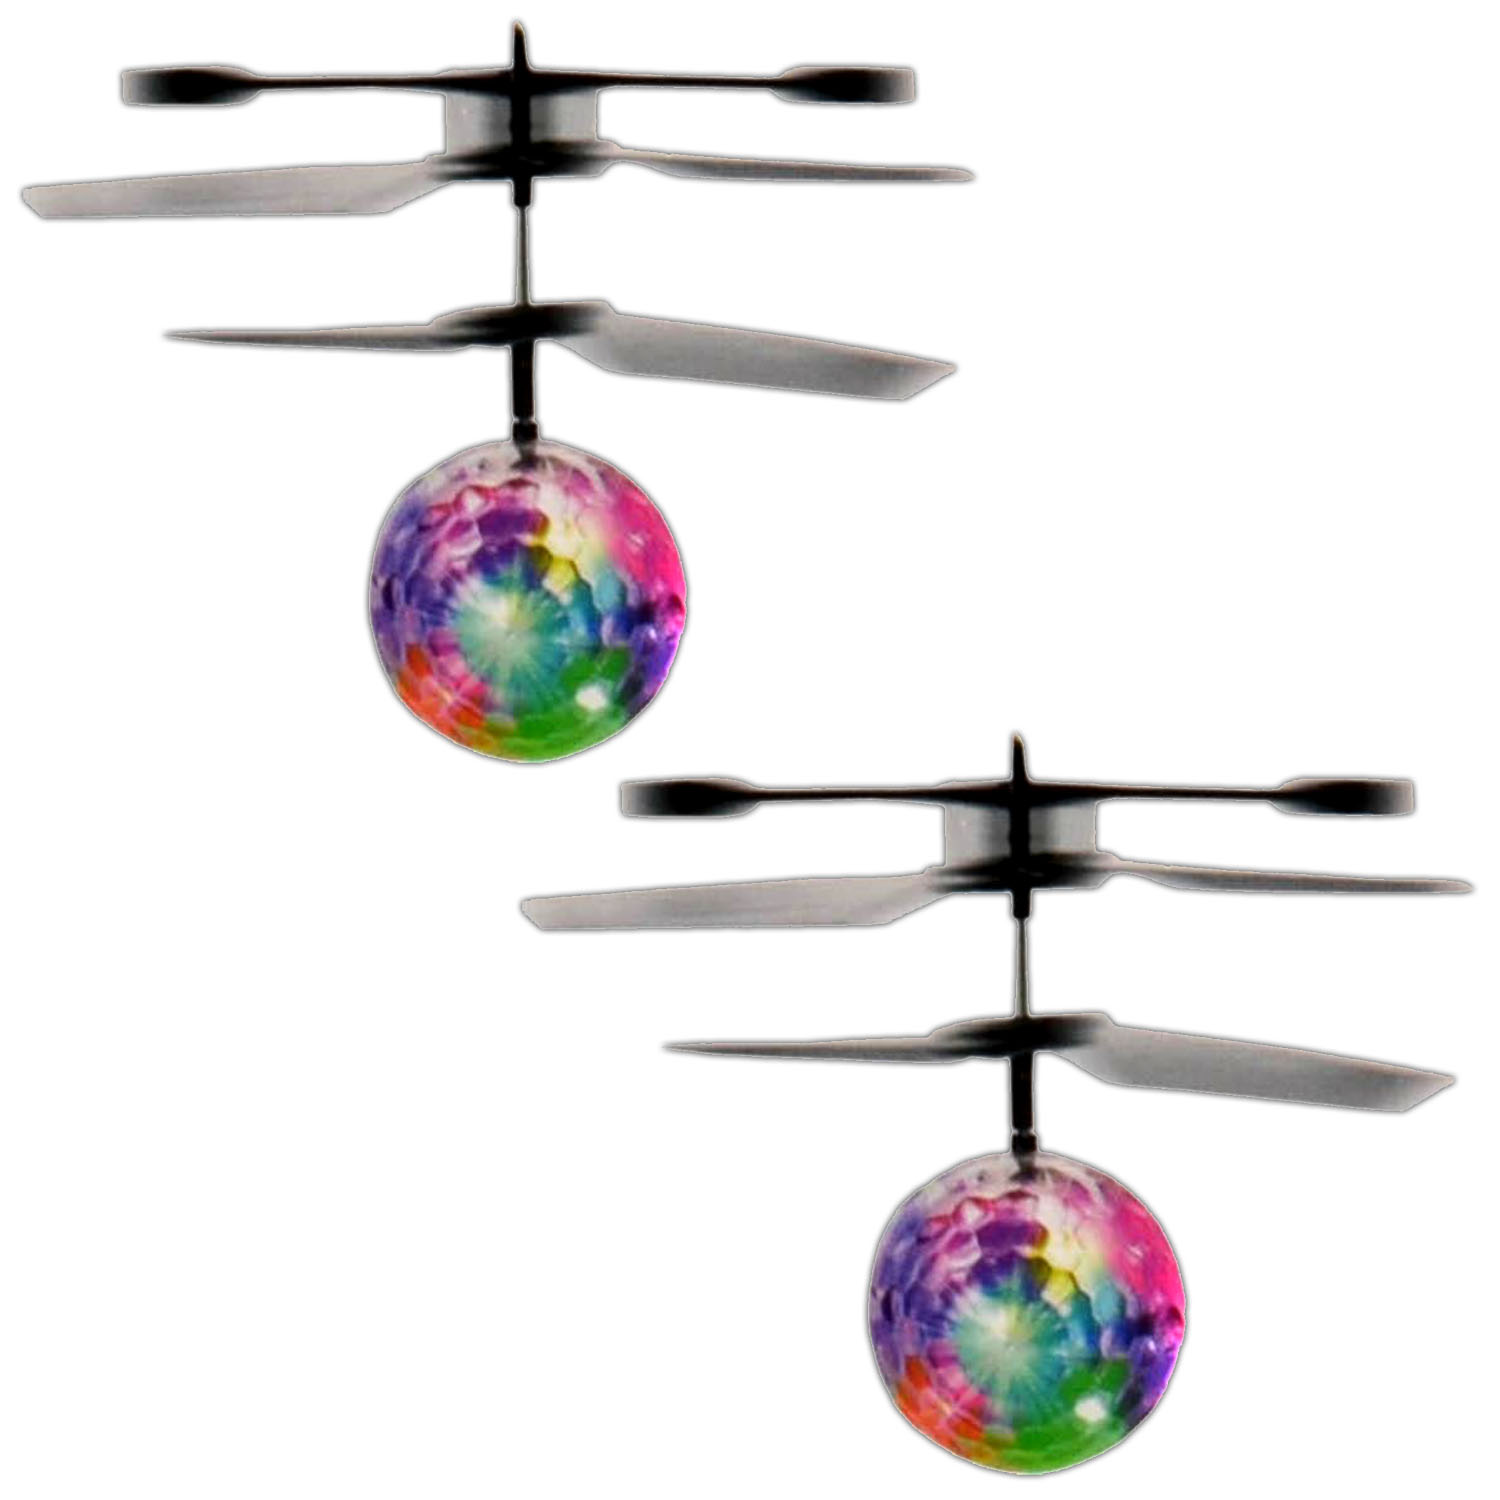 Fliegender Kugel Sensor RC Ball Disco Spielzeug Infrarot Drohnen Helicopter 